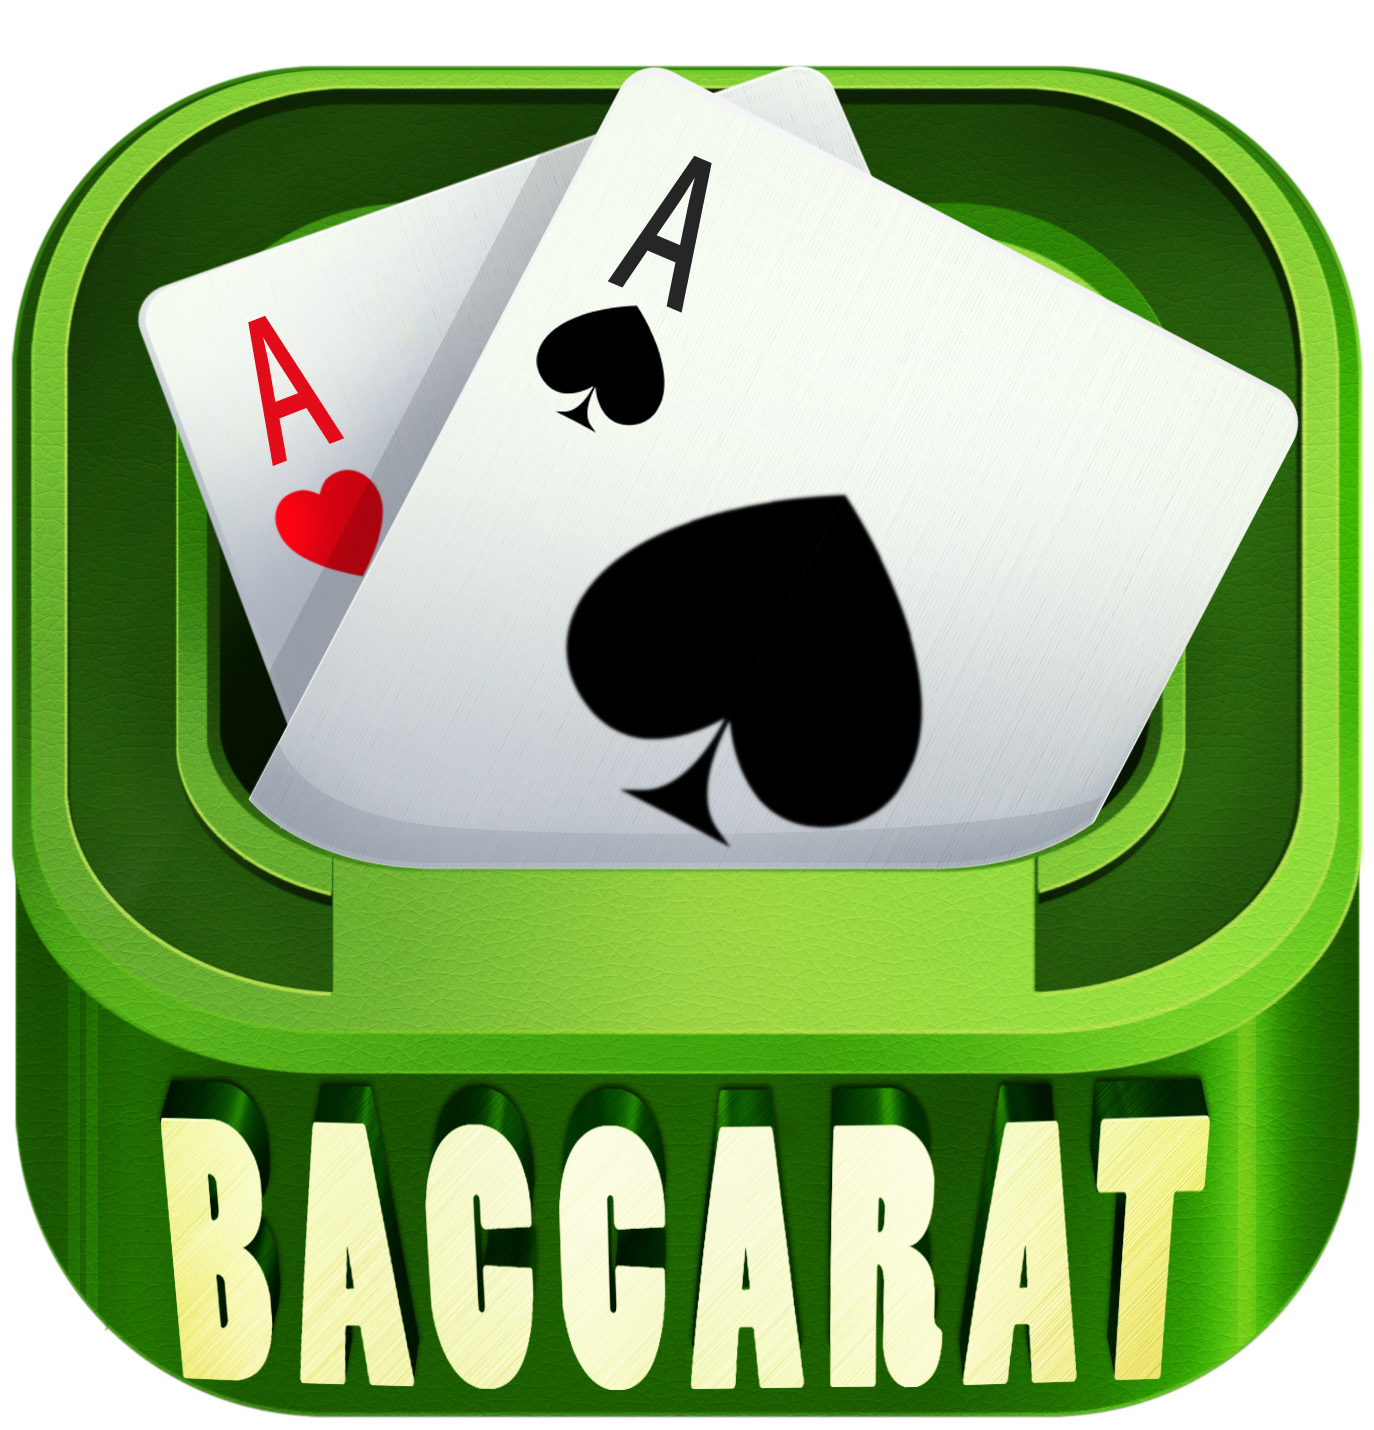 Baccarat & Slot